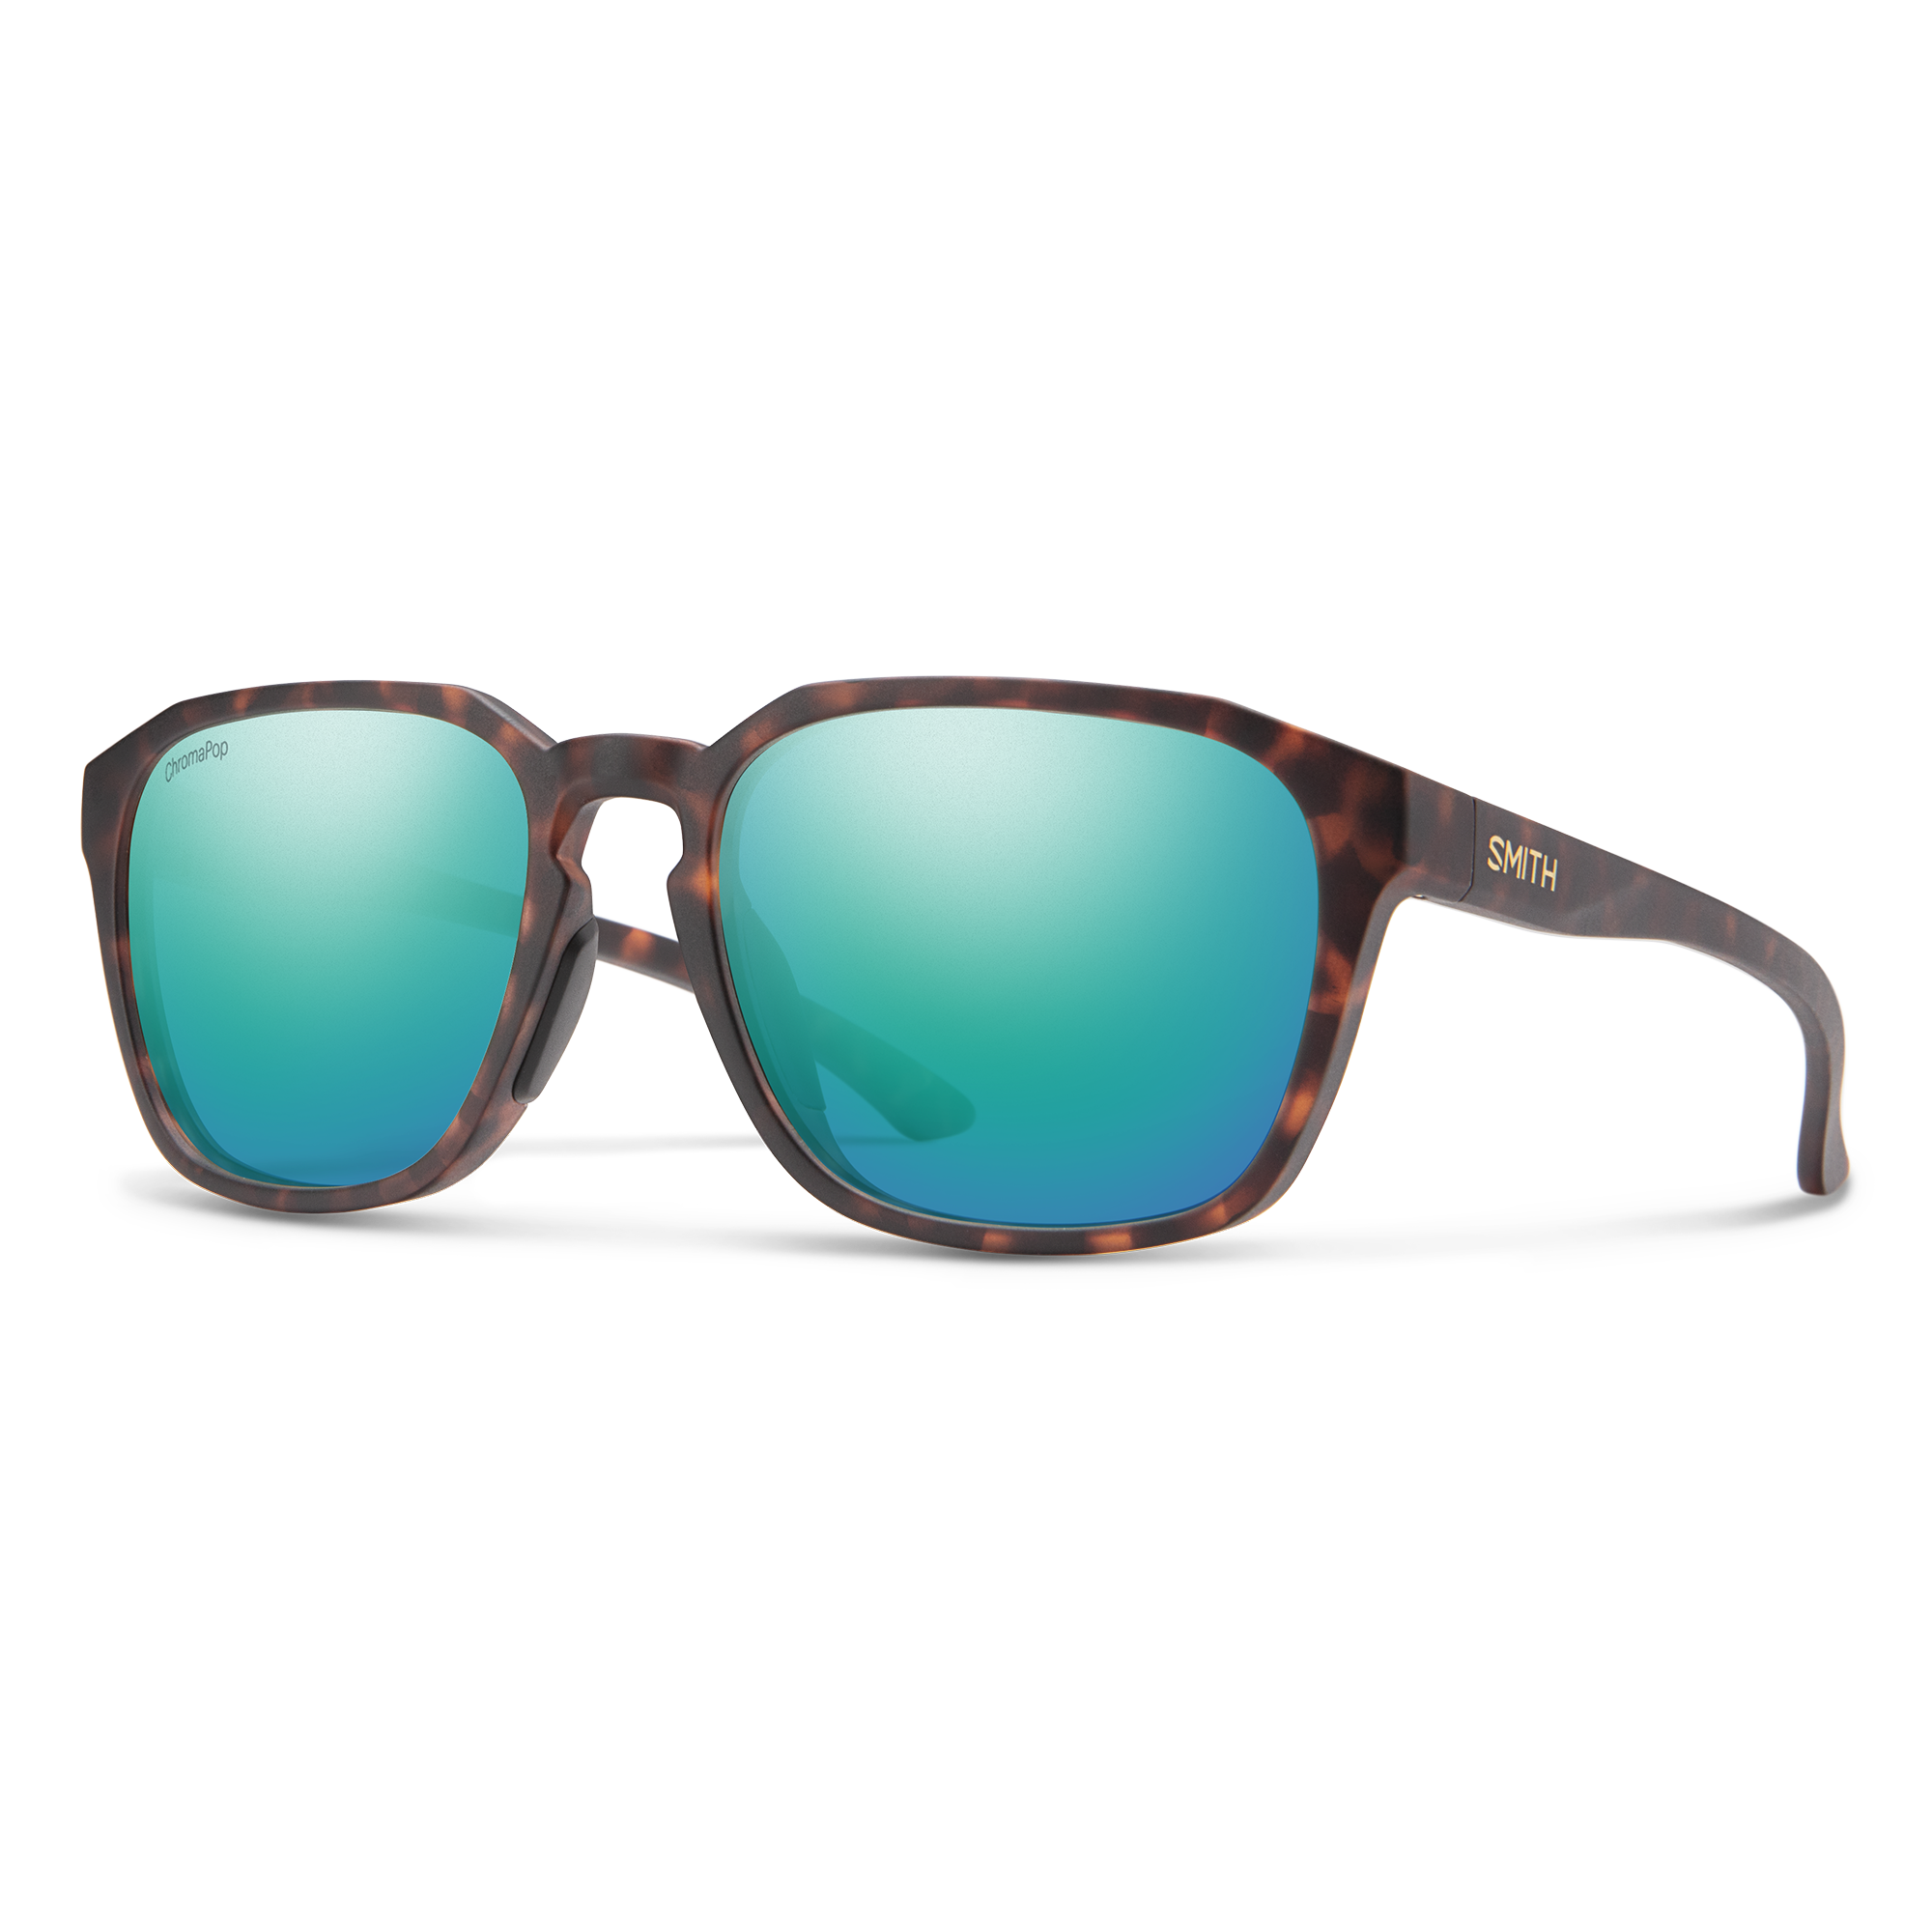 Smith sunglasses | Shop Smith sunnies online